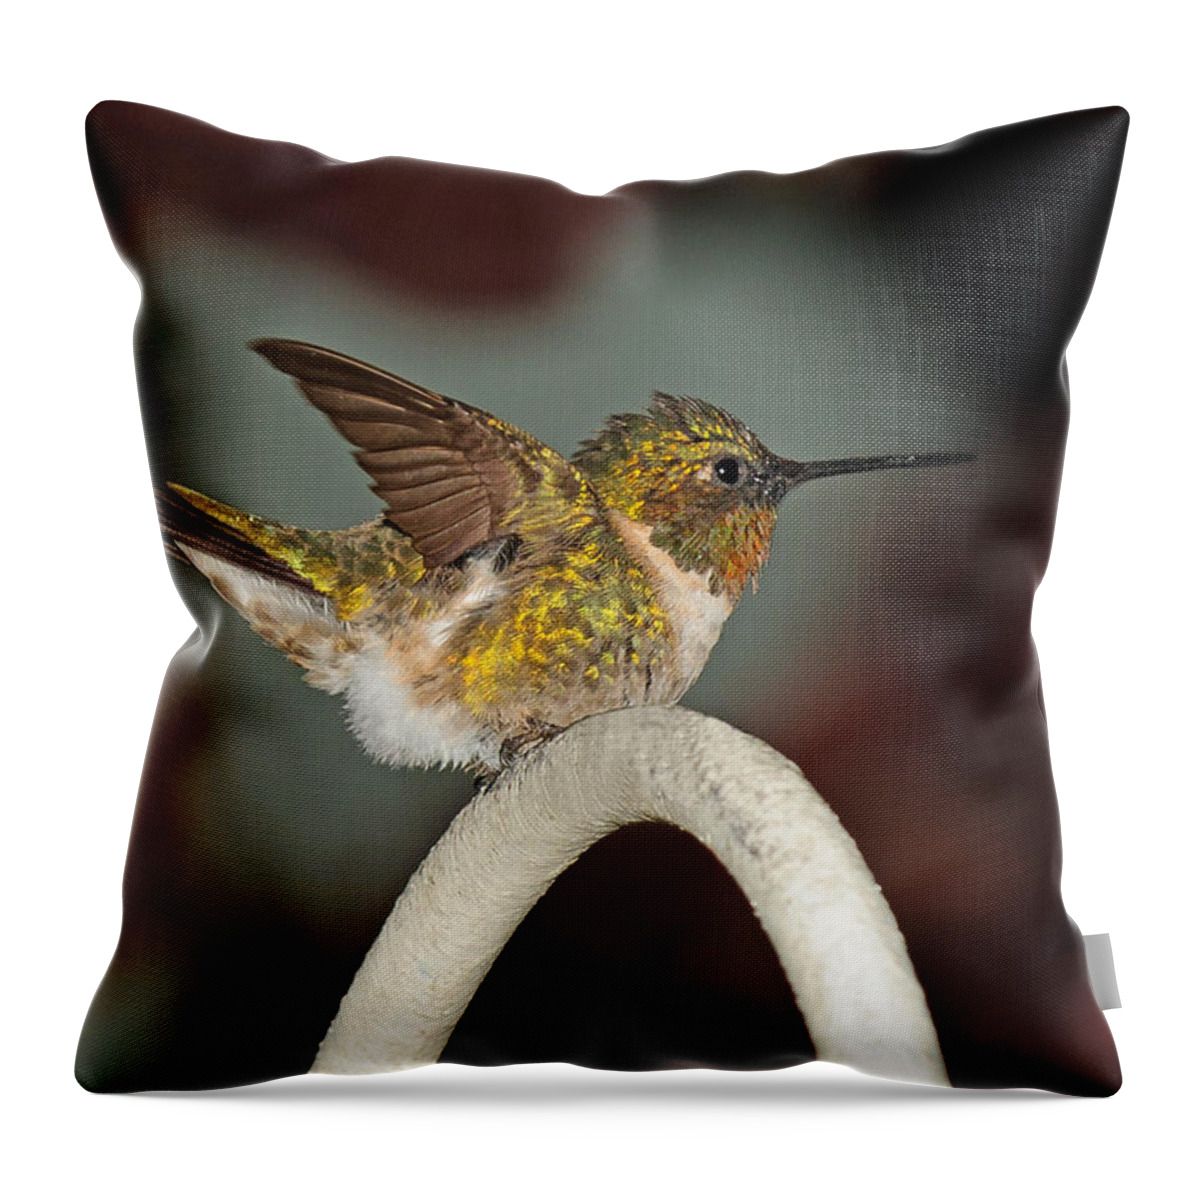 Hummingbird Throw Pillow featuring the photograph The Ruffled Hummer by Lara Ellis